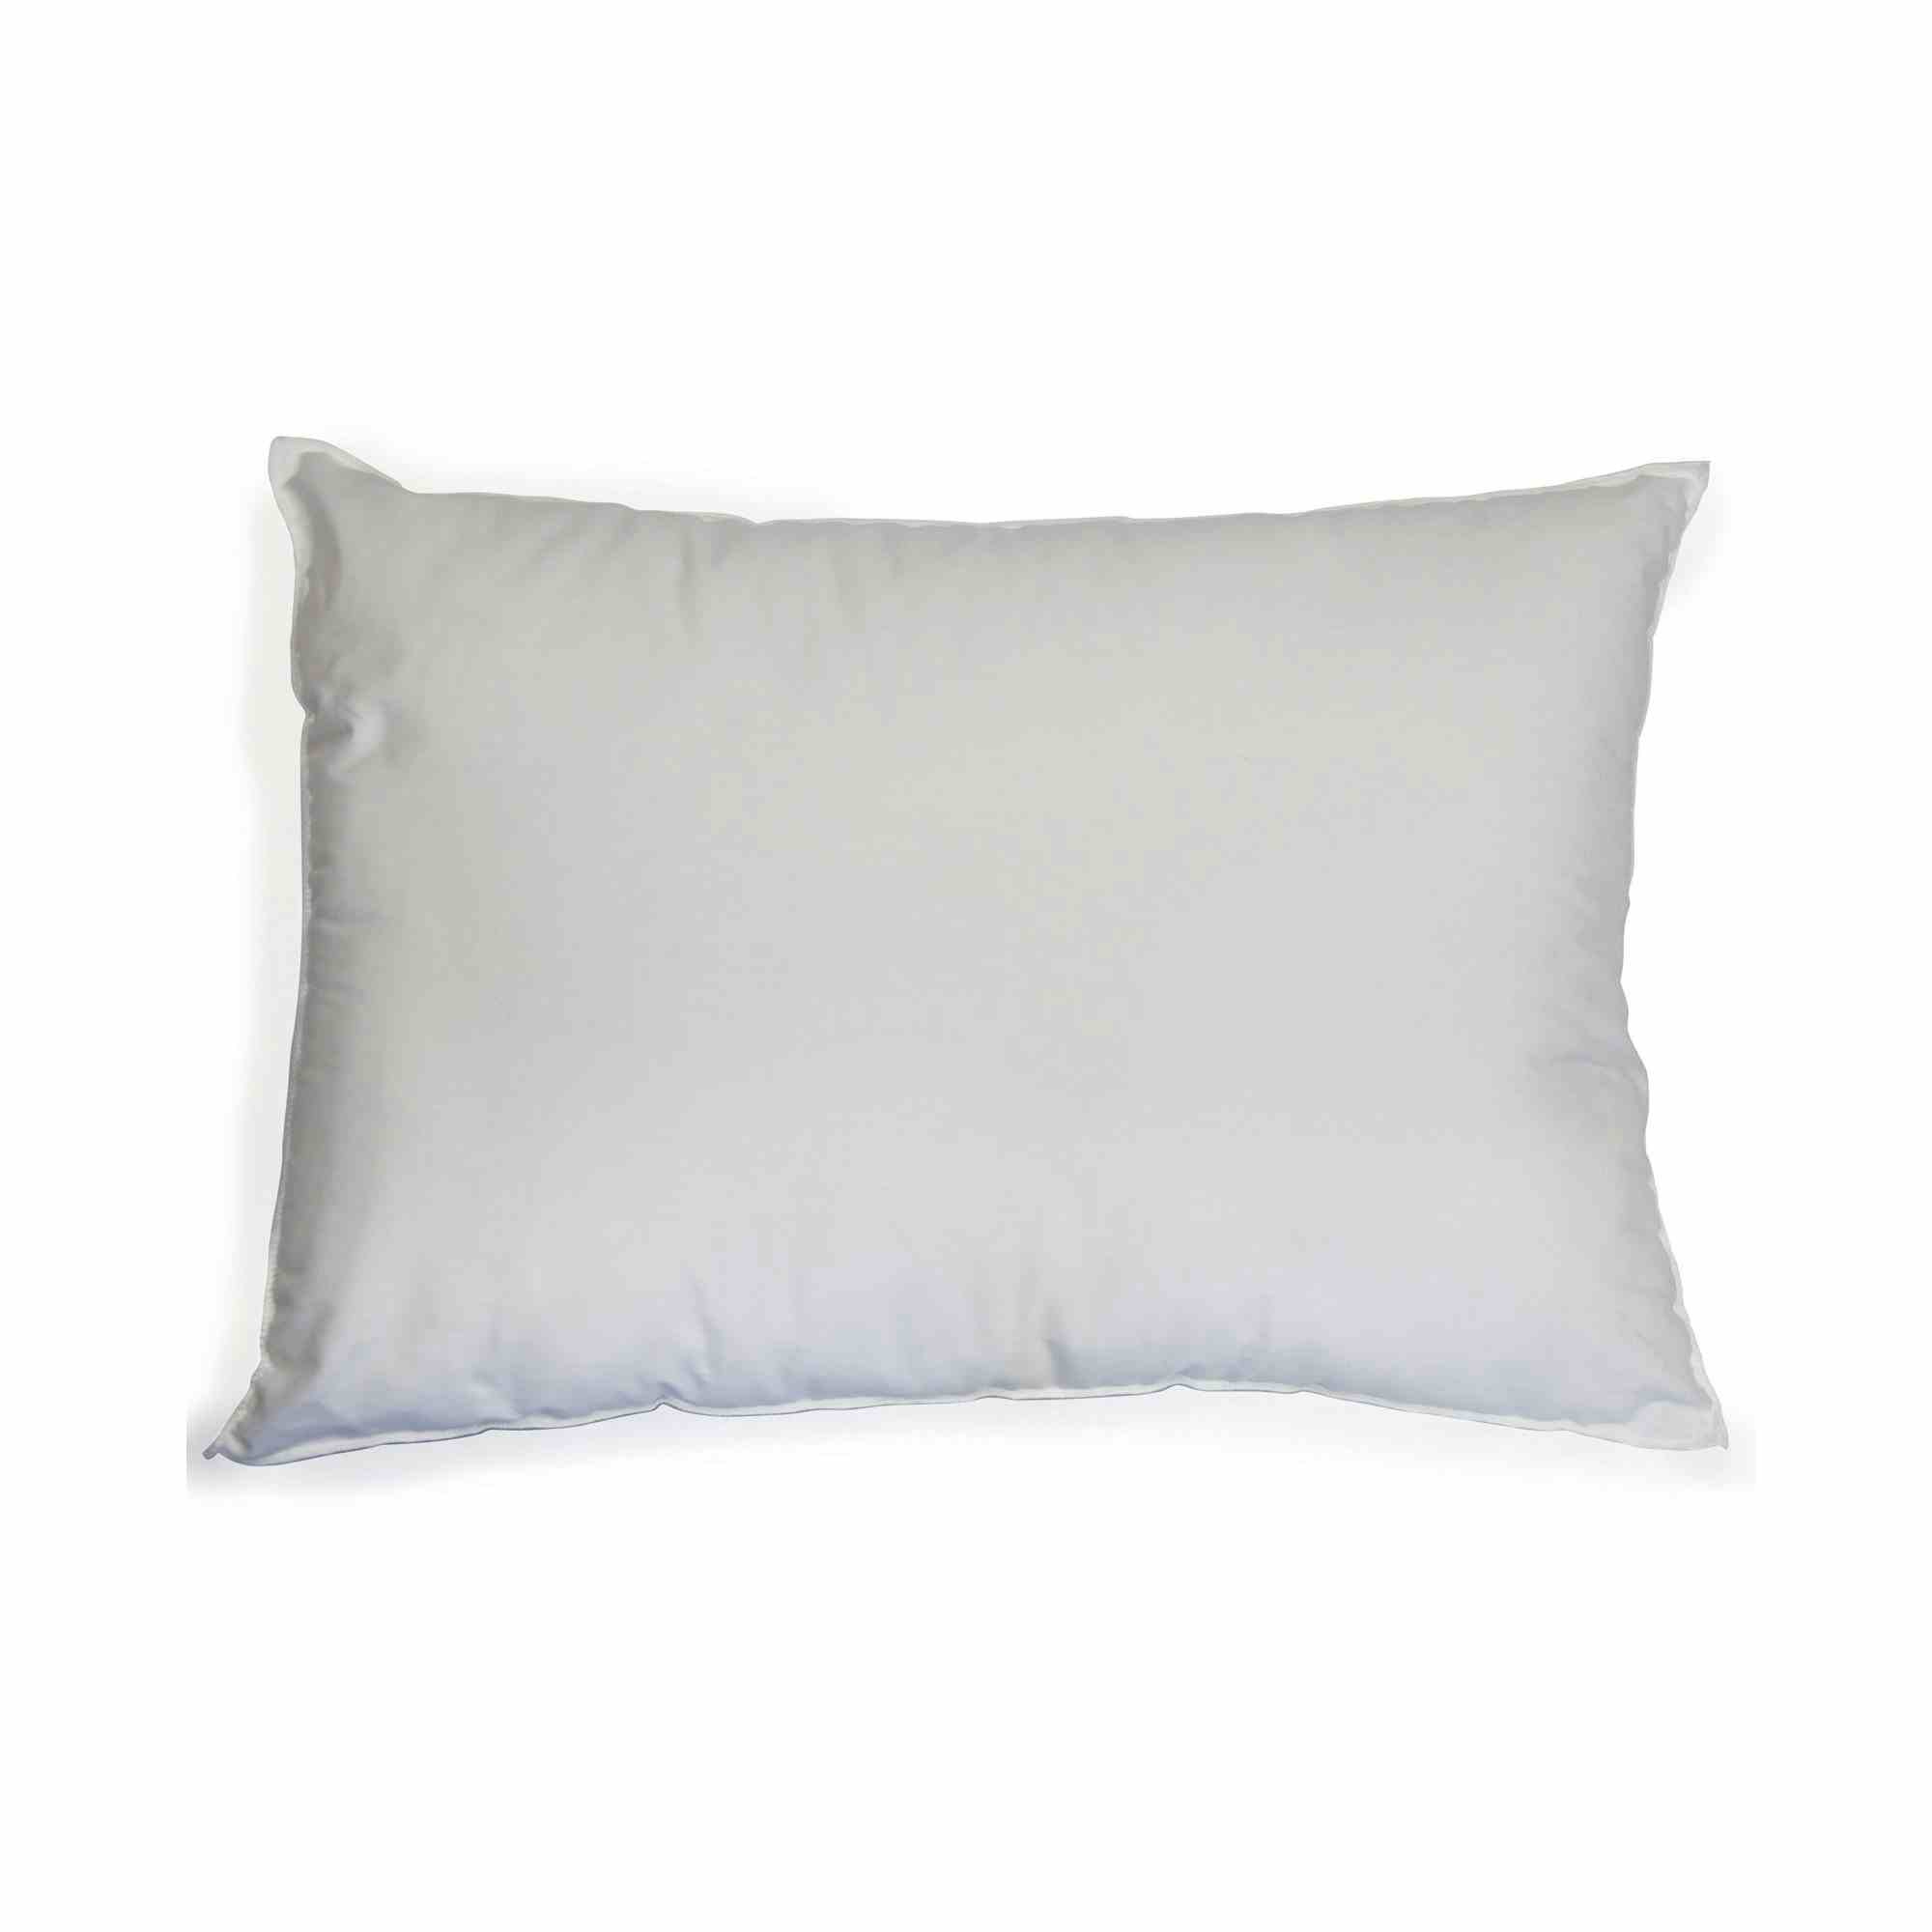 McKesson Bed Pillow, 41-2127-WS, White (21 X 27") - 1 Each